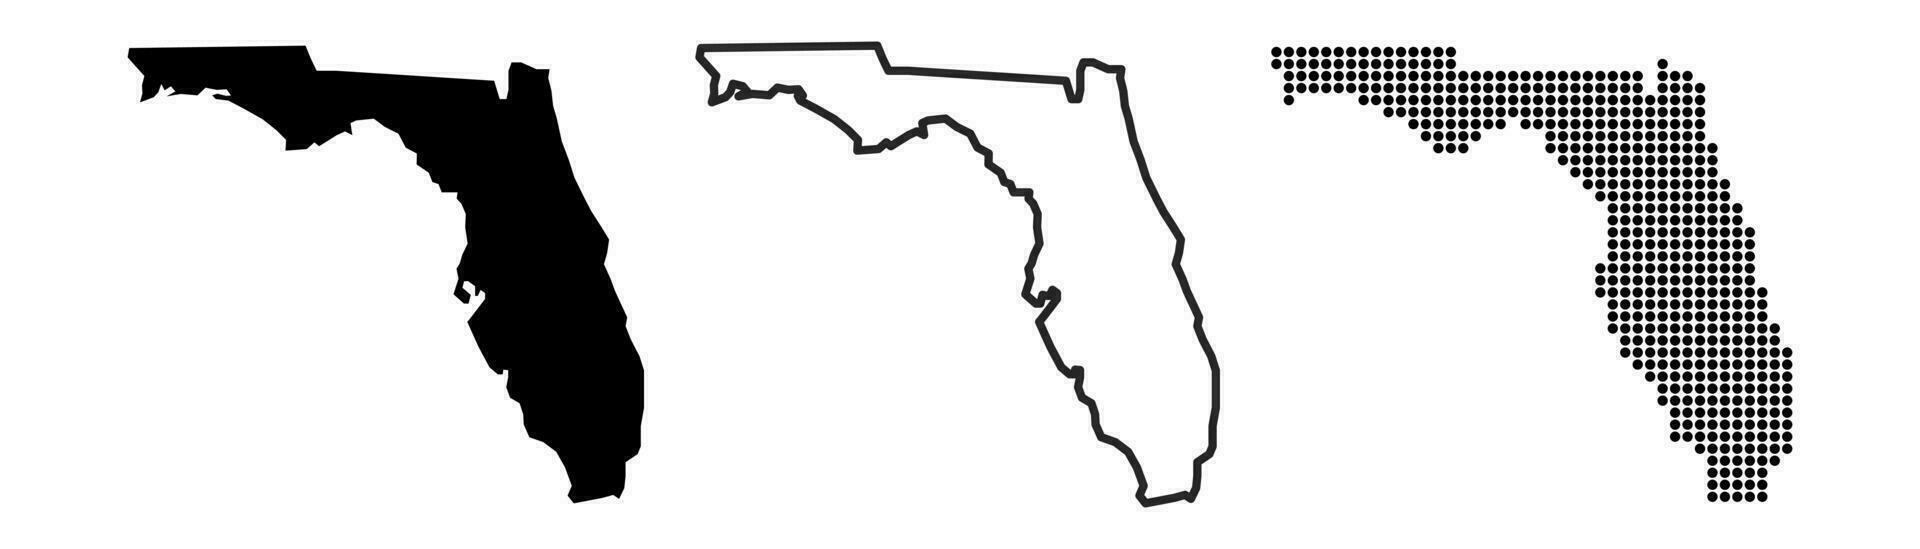 Florida Karte Kontur. Florida Zustand Karte. Glyphe und Gliederung Florida Karte. uns Zustand Karte. Sarasota Bezirk. Tampa und Miami Silhouette. vektor